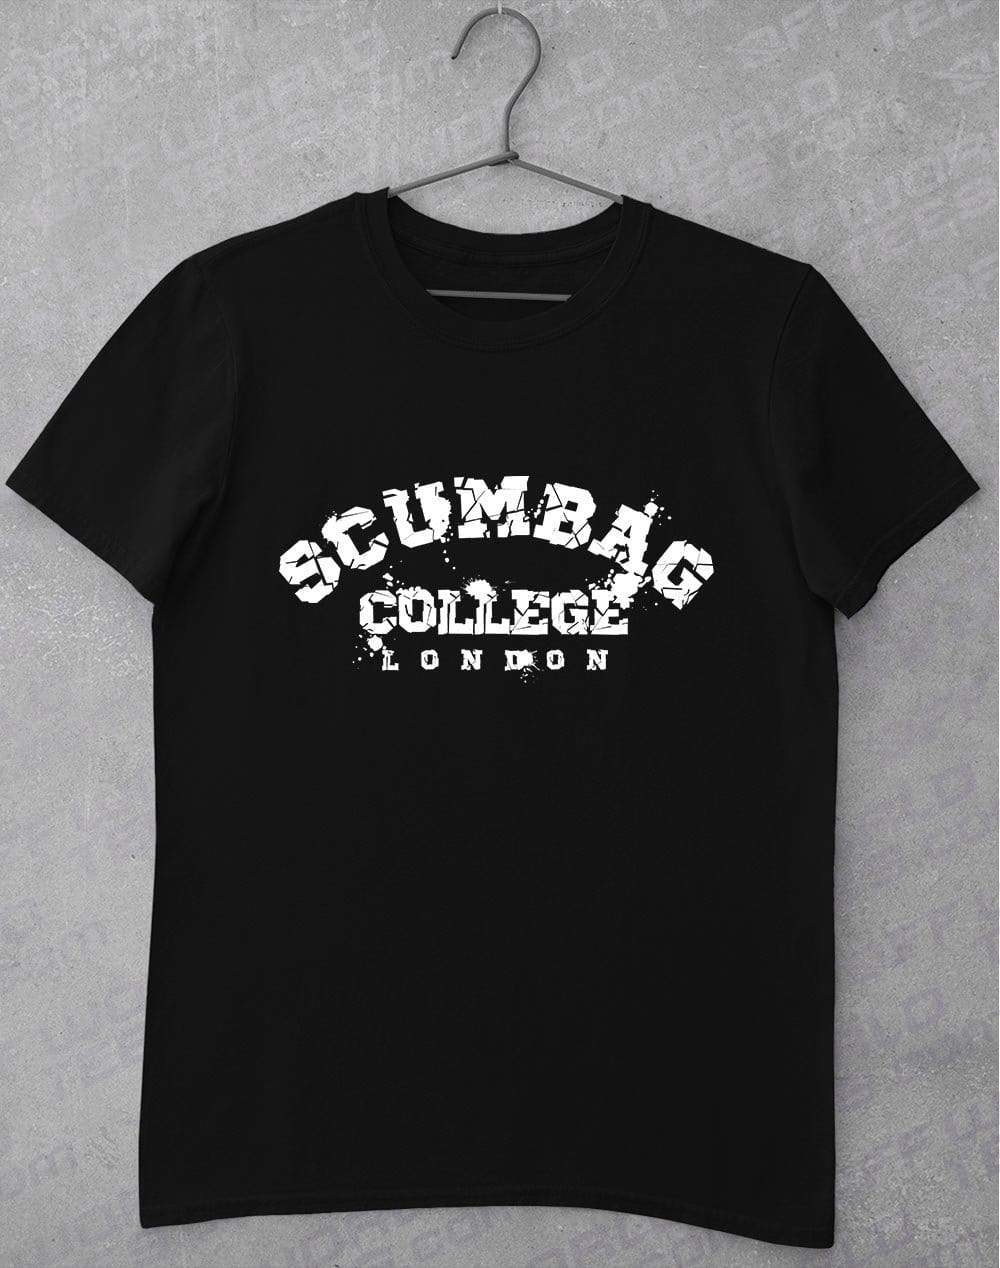 Scumbag College T-Shirt S / Black  - Off World Tees